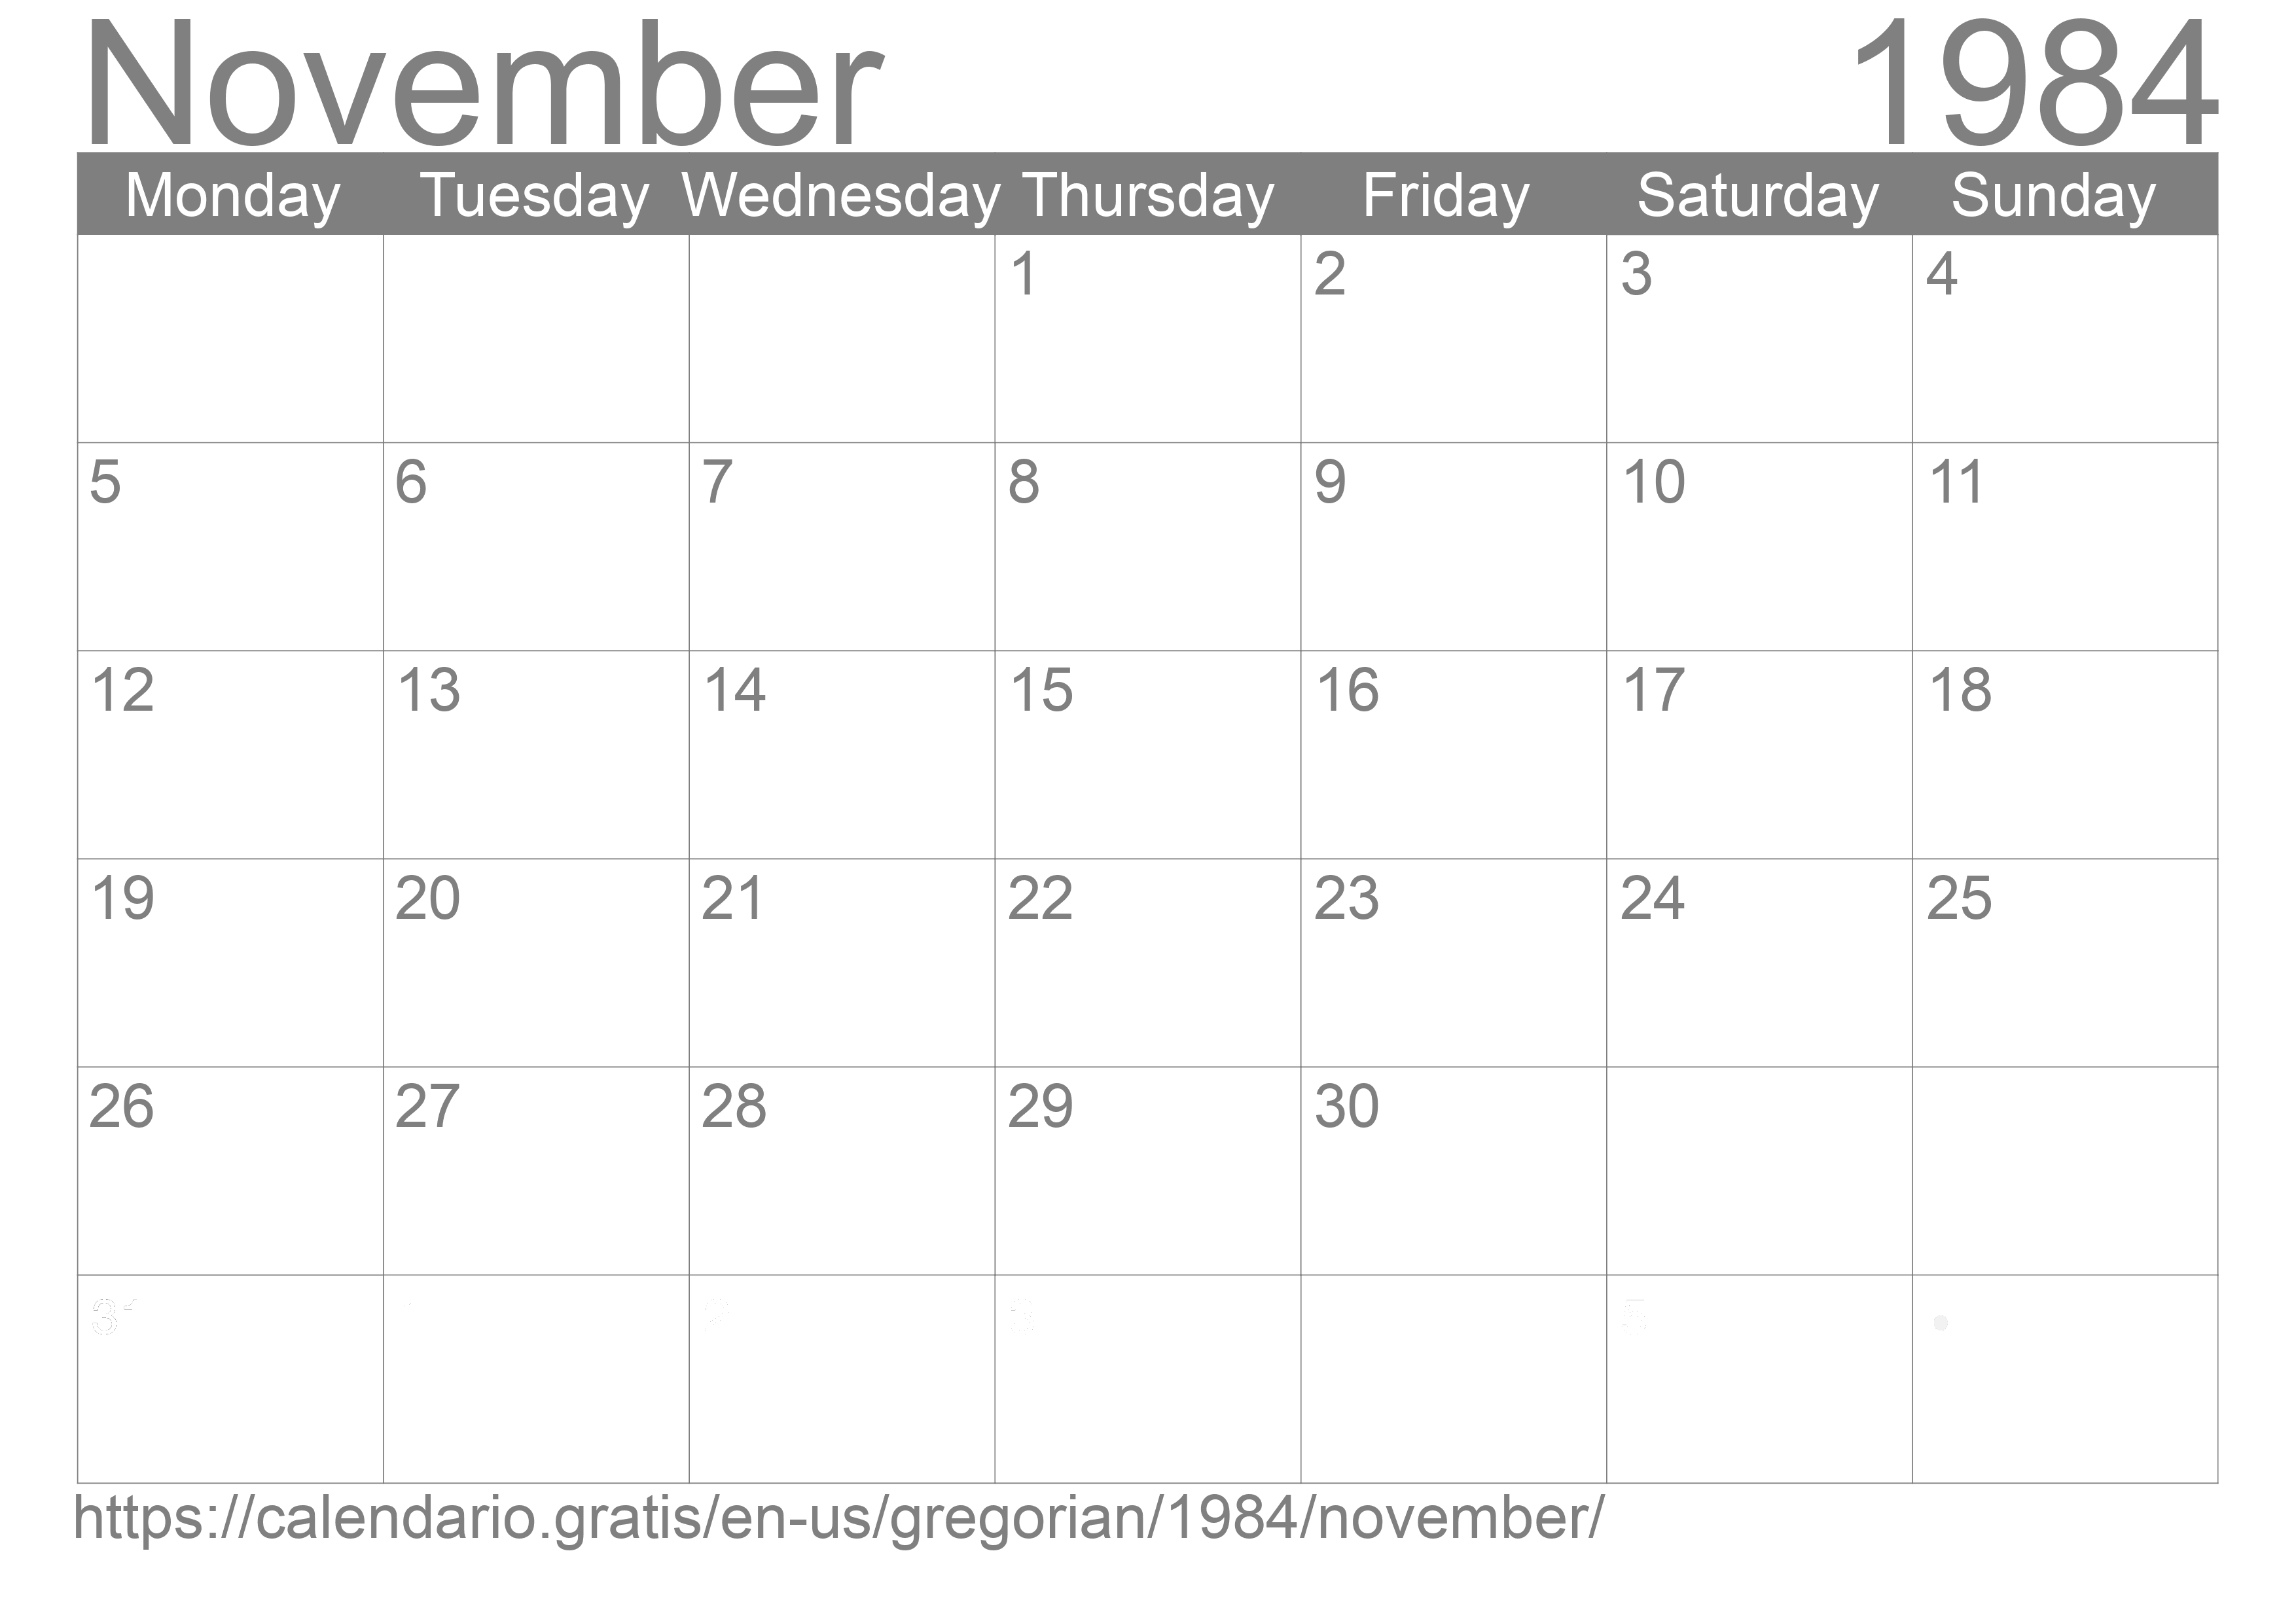 Calendar November 1984 to print